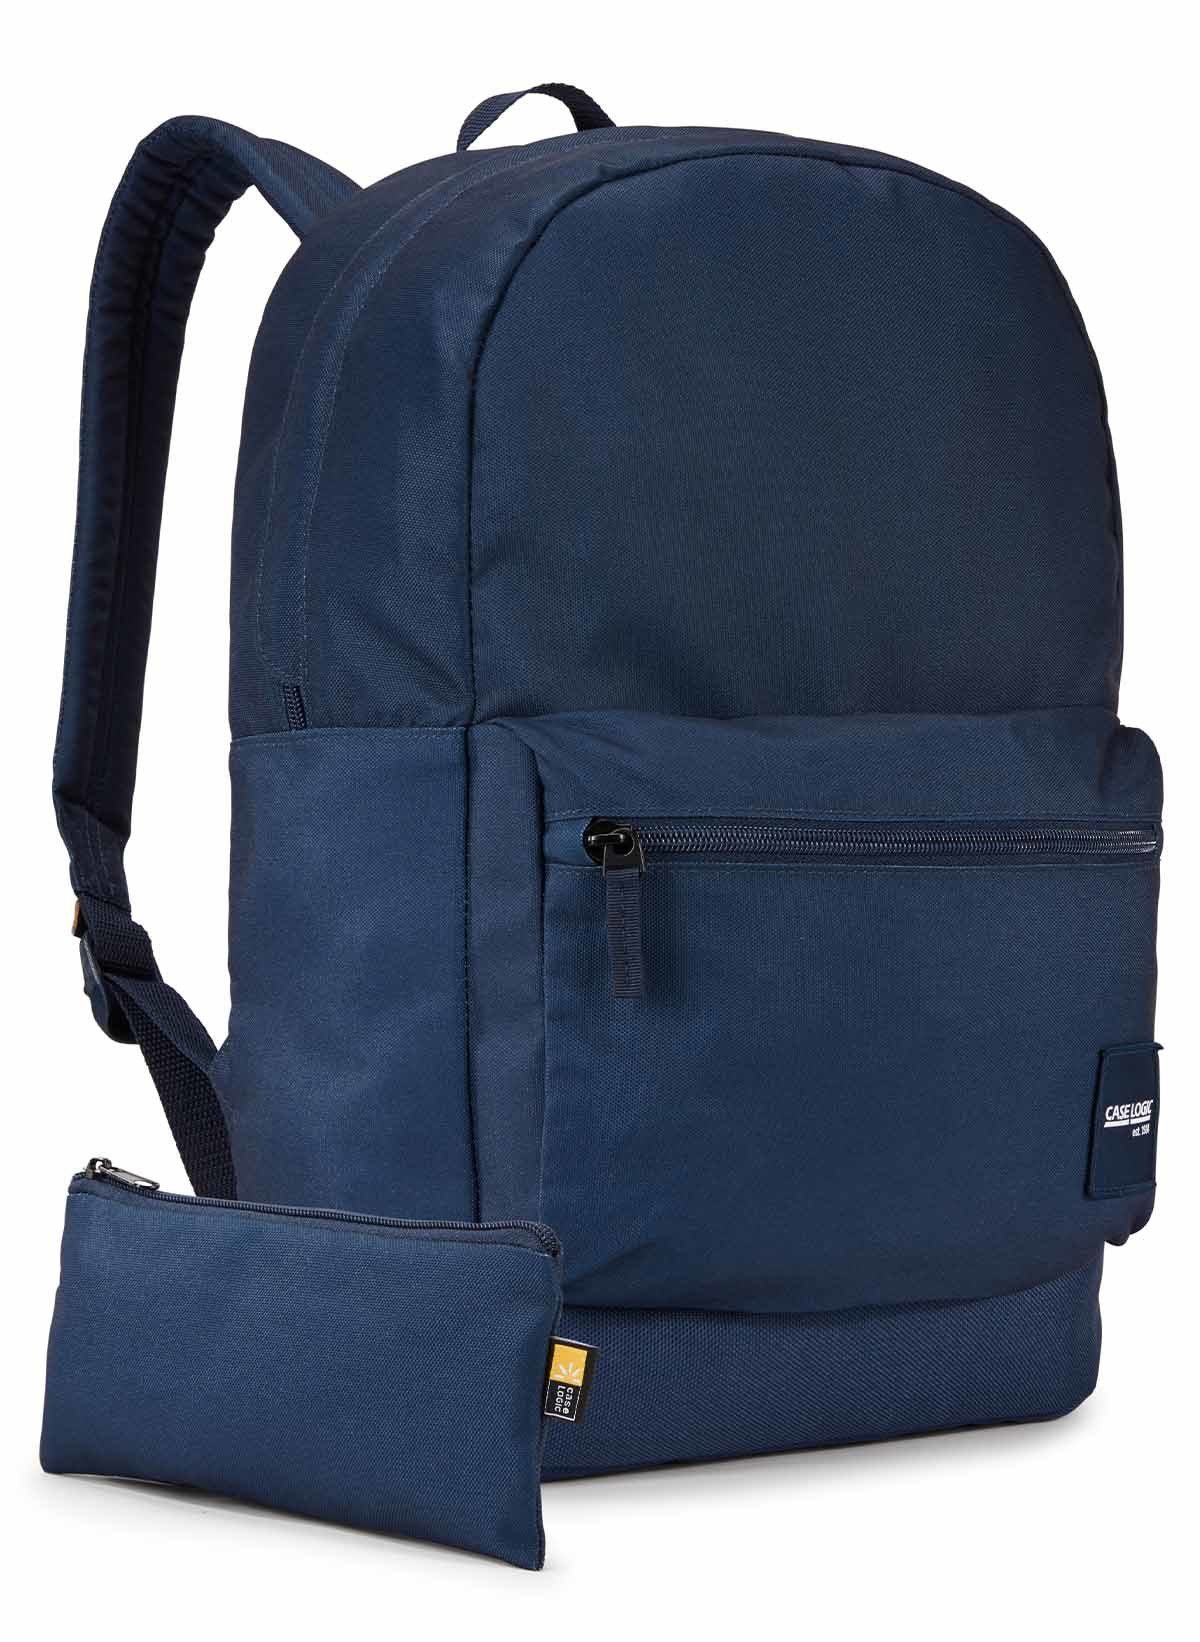 Backpack Case Logic Recycled Dress Case Notebookrucksack Commence Logic Blue